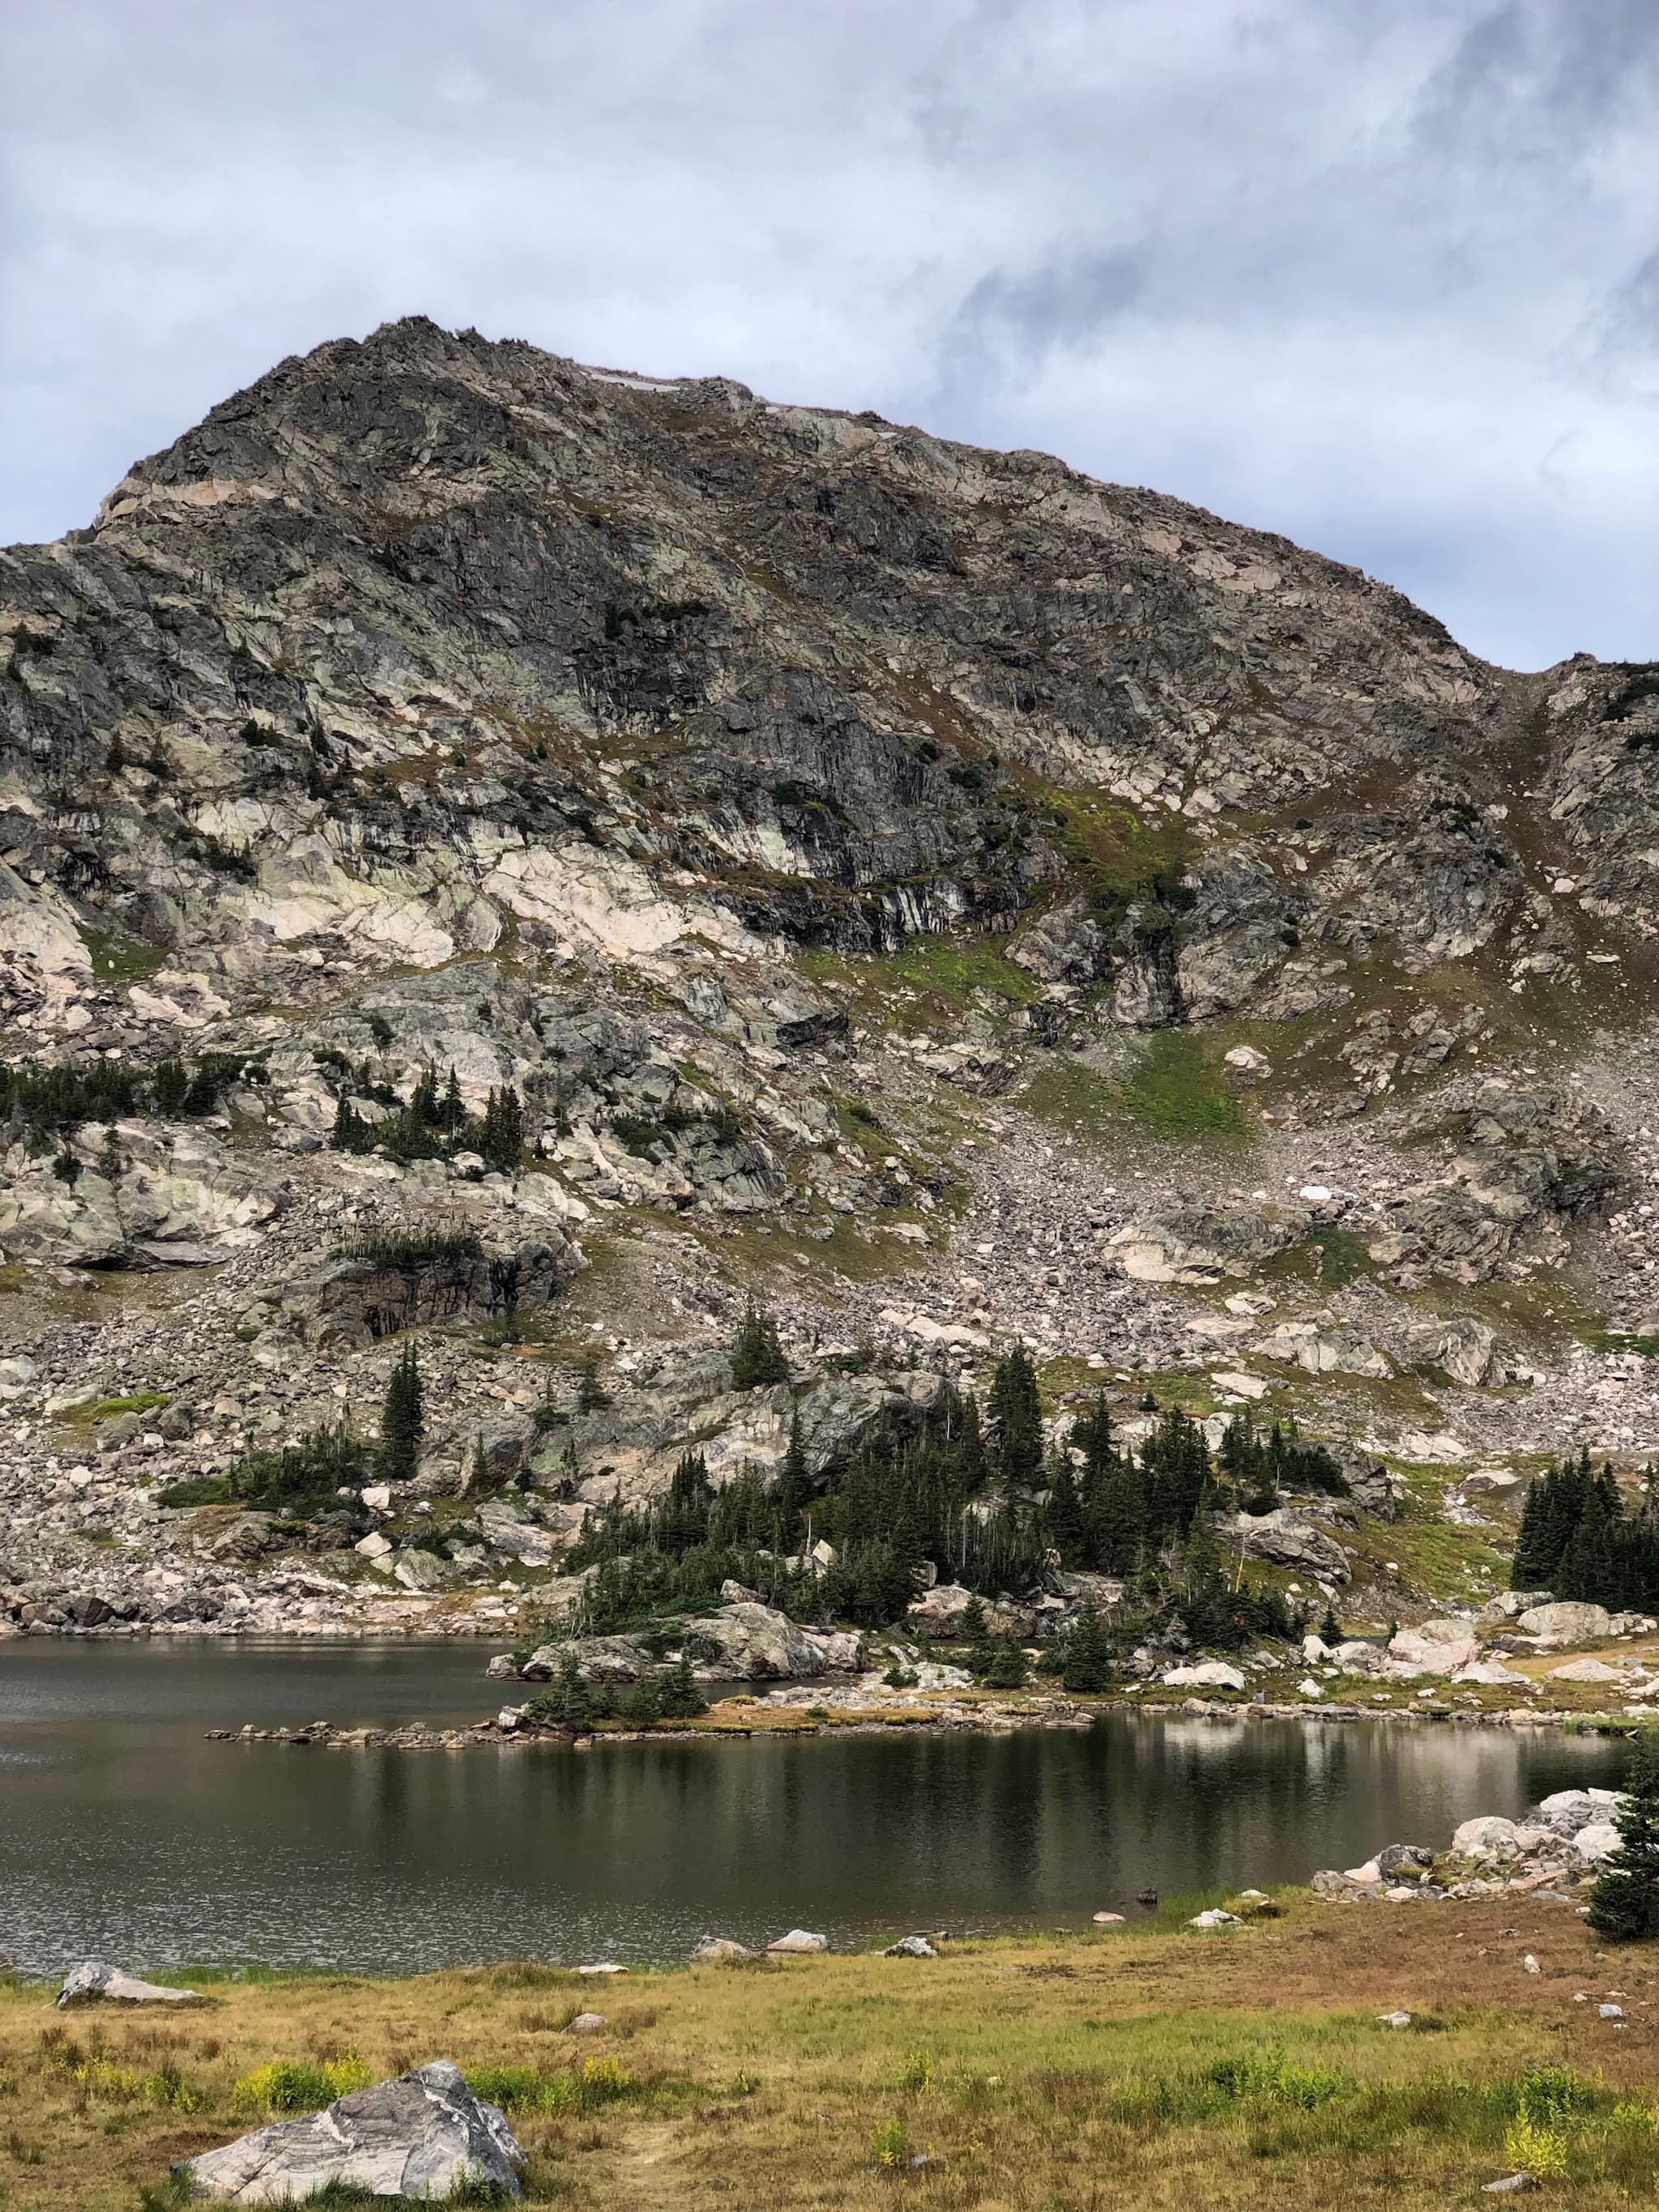 A granite mountain behind an alpine lake